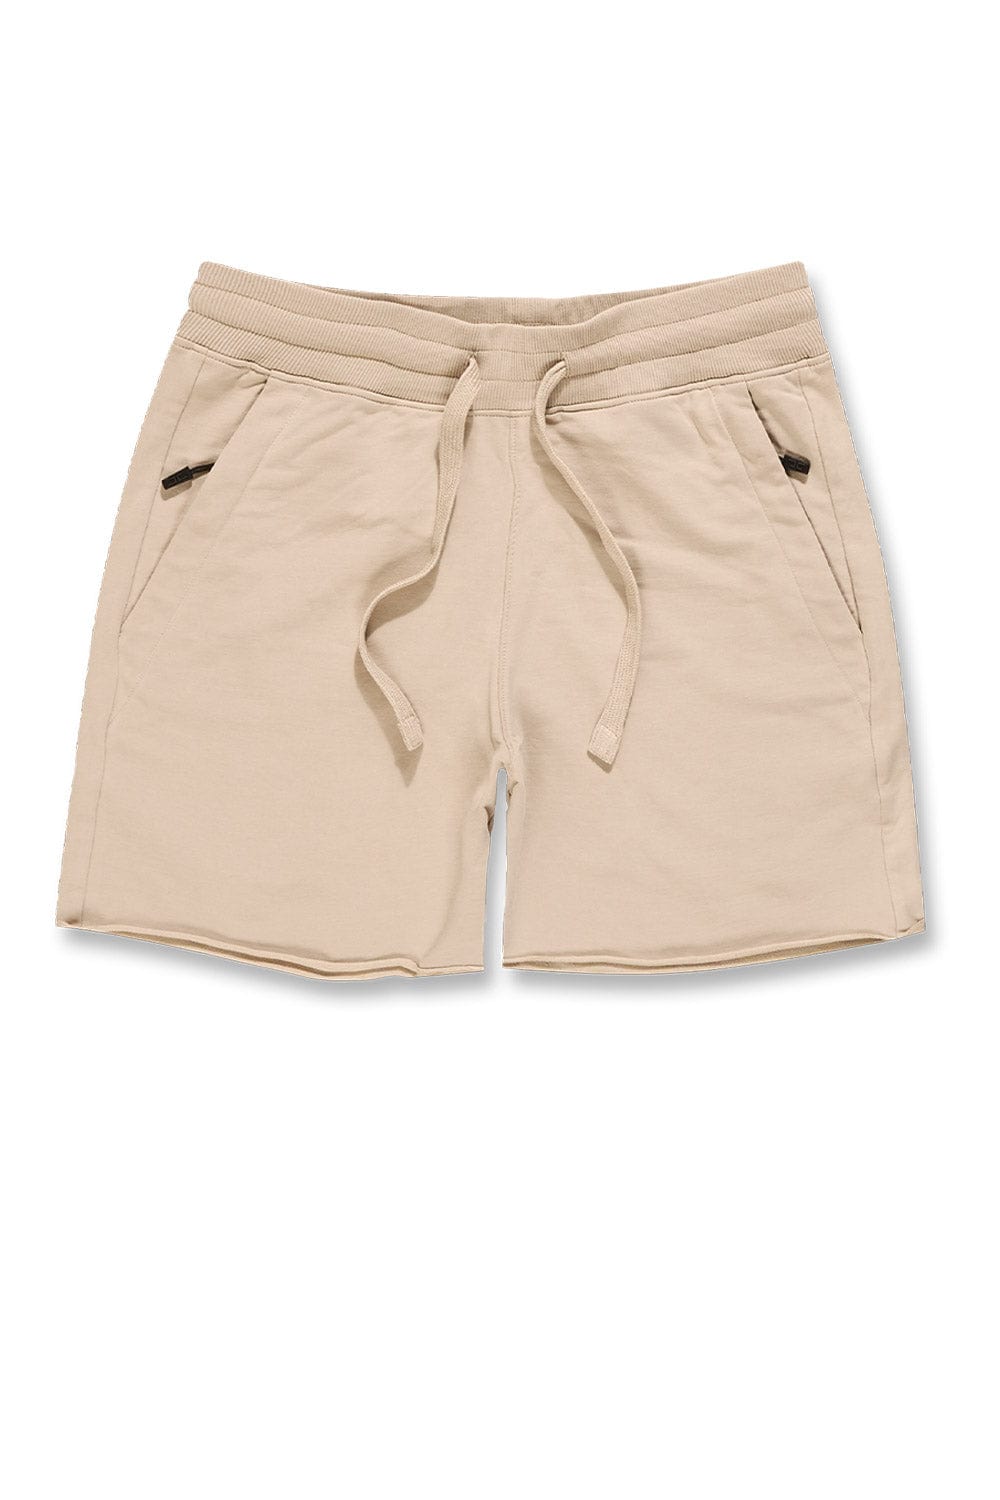 Jordan Craig Athletic - Summer Breeze Knit Shorts Natural Sand / S